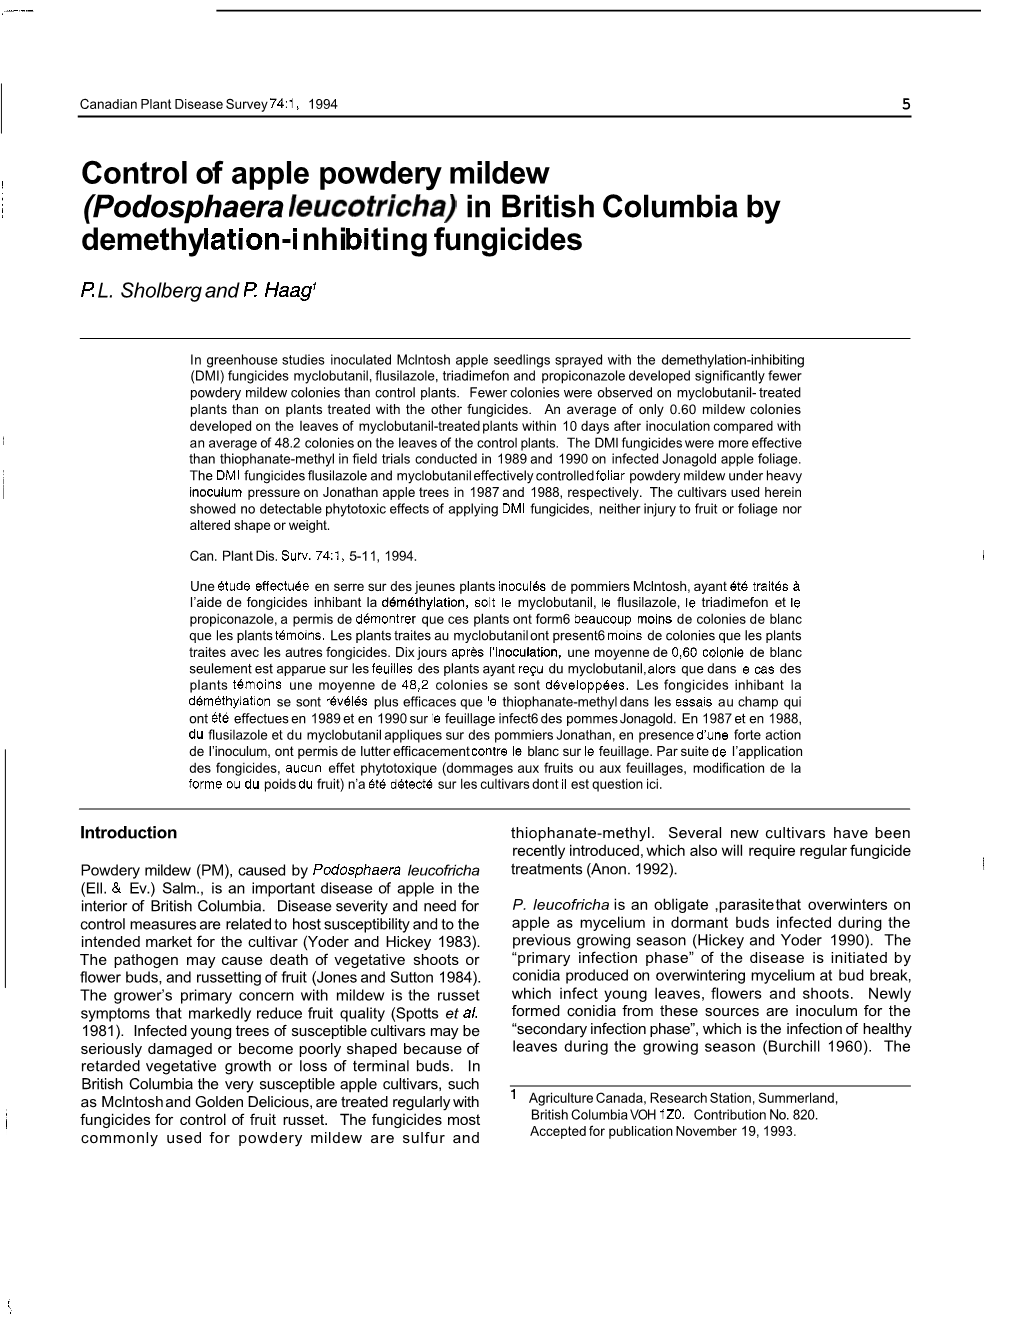 Control of Apple Powdery Mildew (Podosphaera Leucotricha) in British Columbia by Demet Hy Lation-In Hi Bi Ti Ng Fungicides